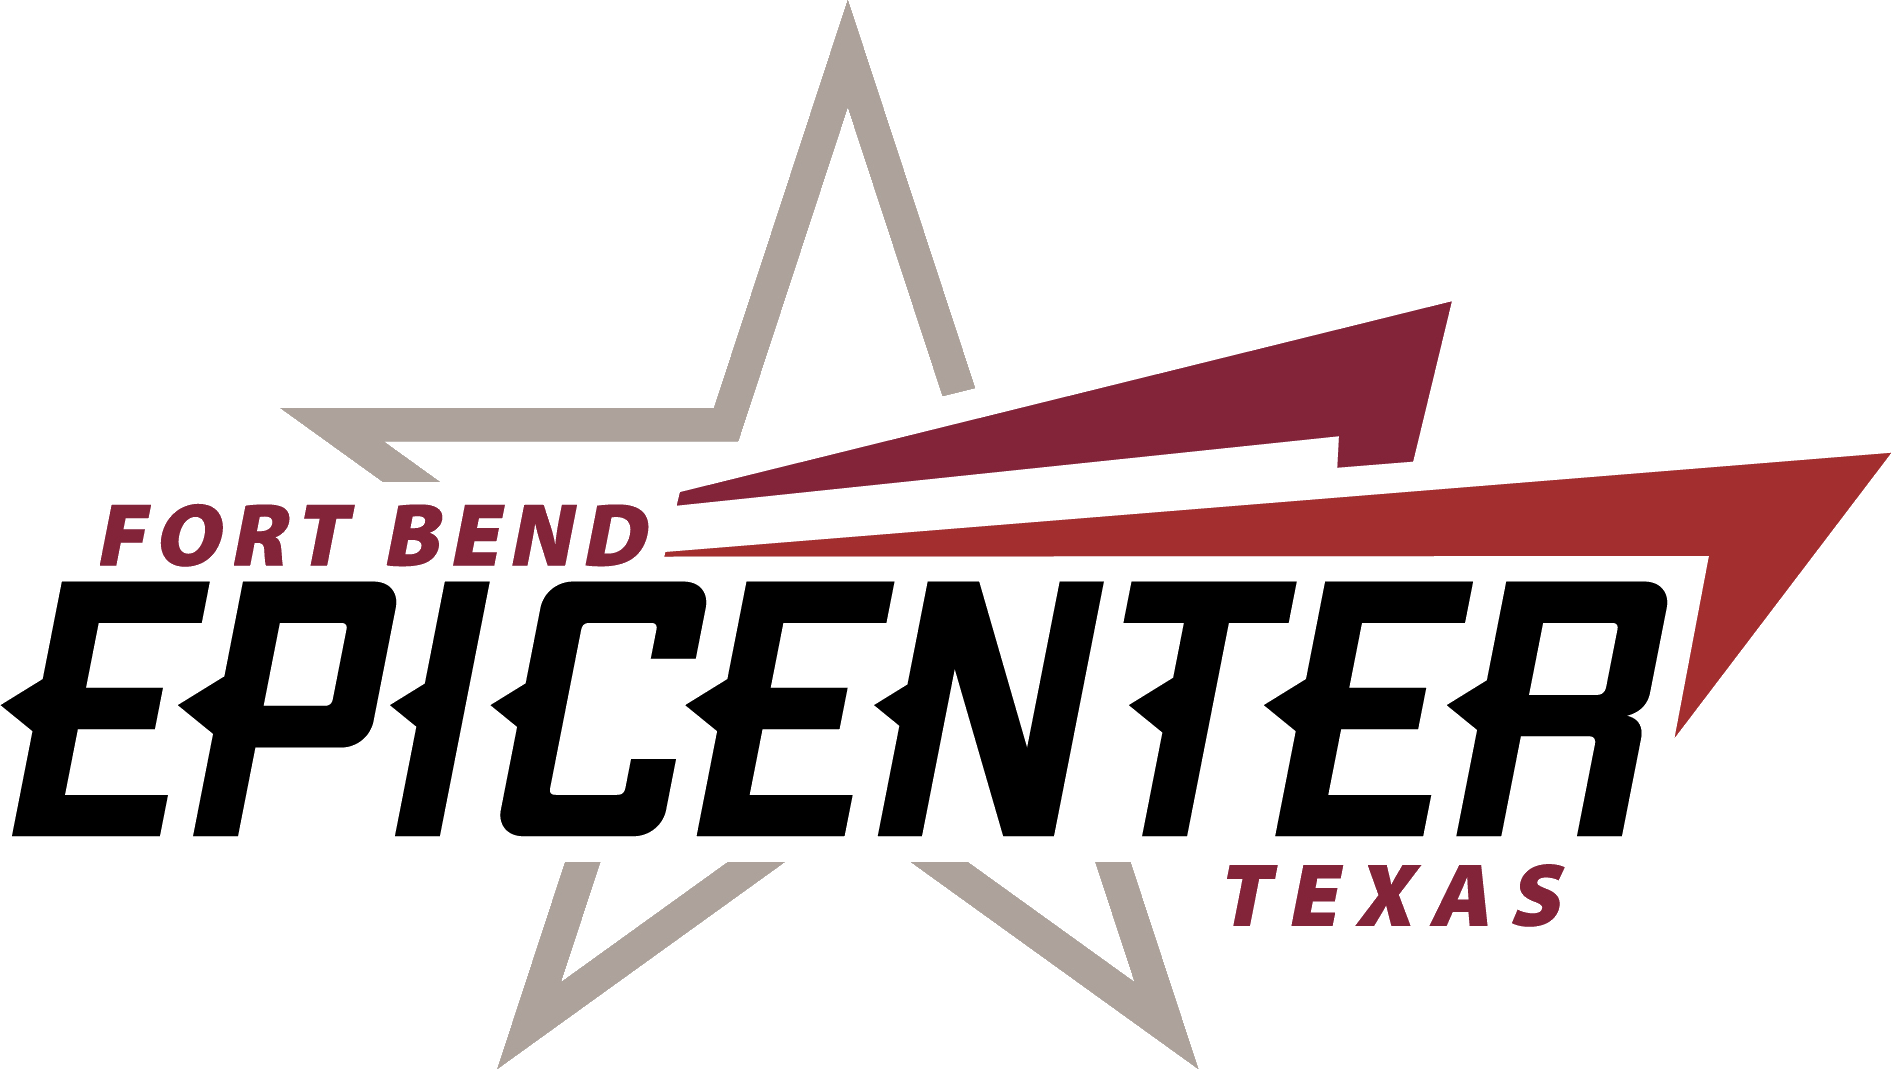 fort bend epicenter texas logo